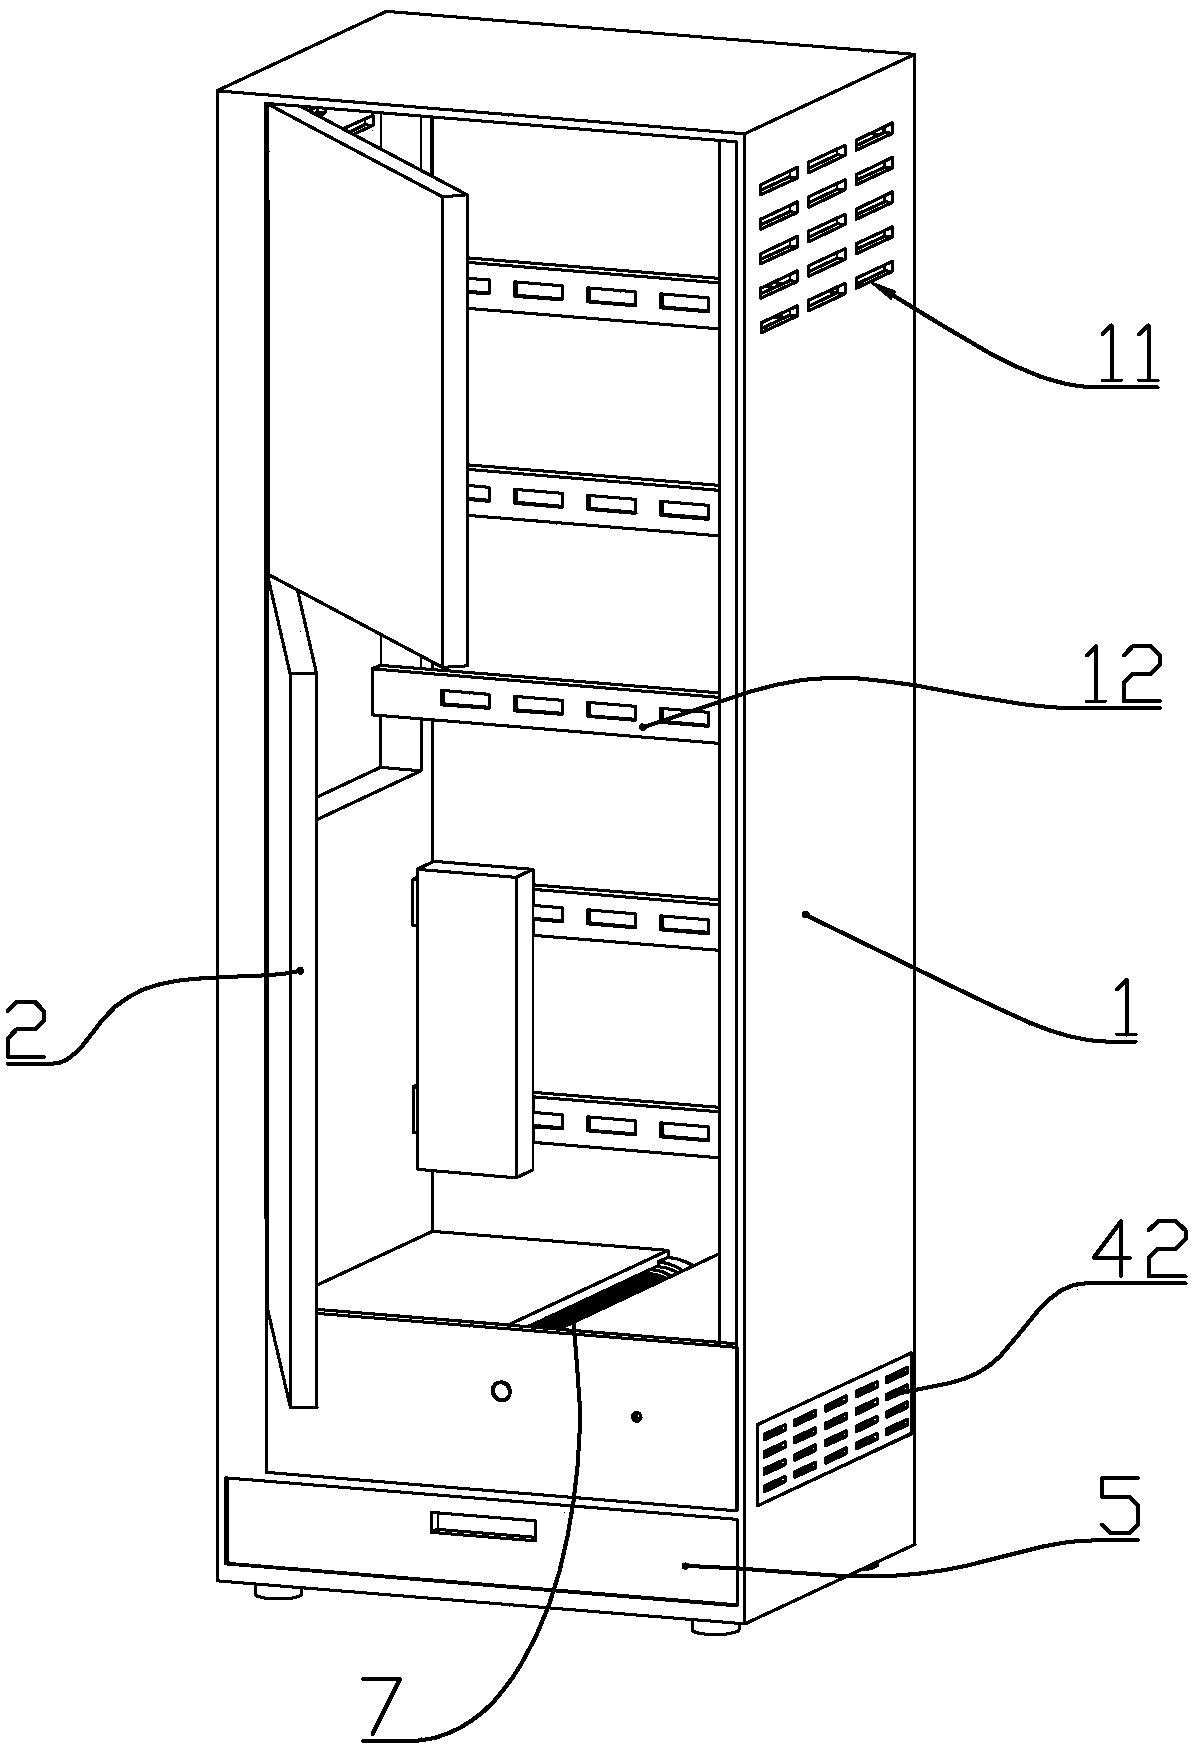 A constant temperature distribution cabinet